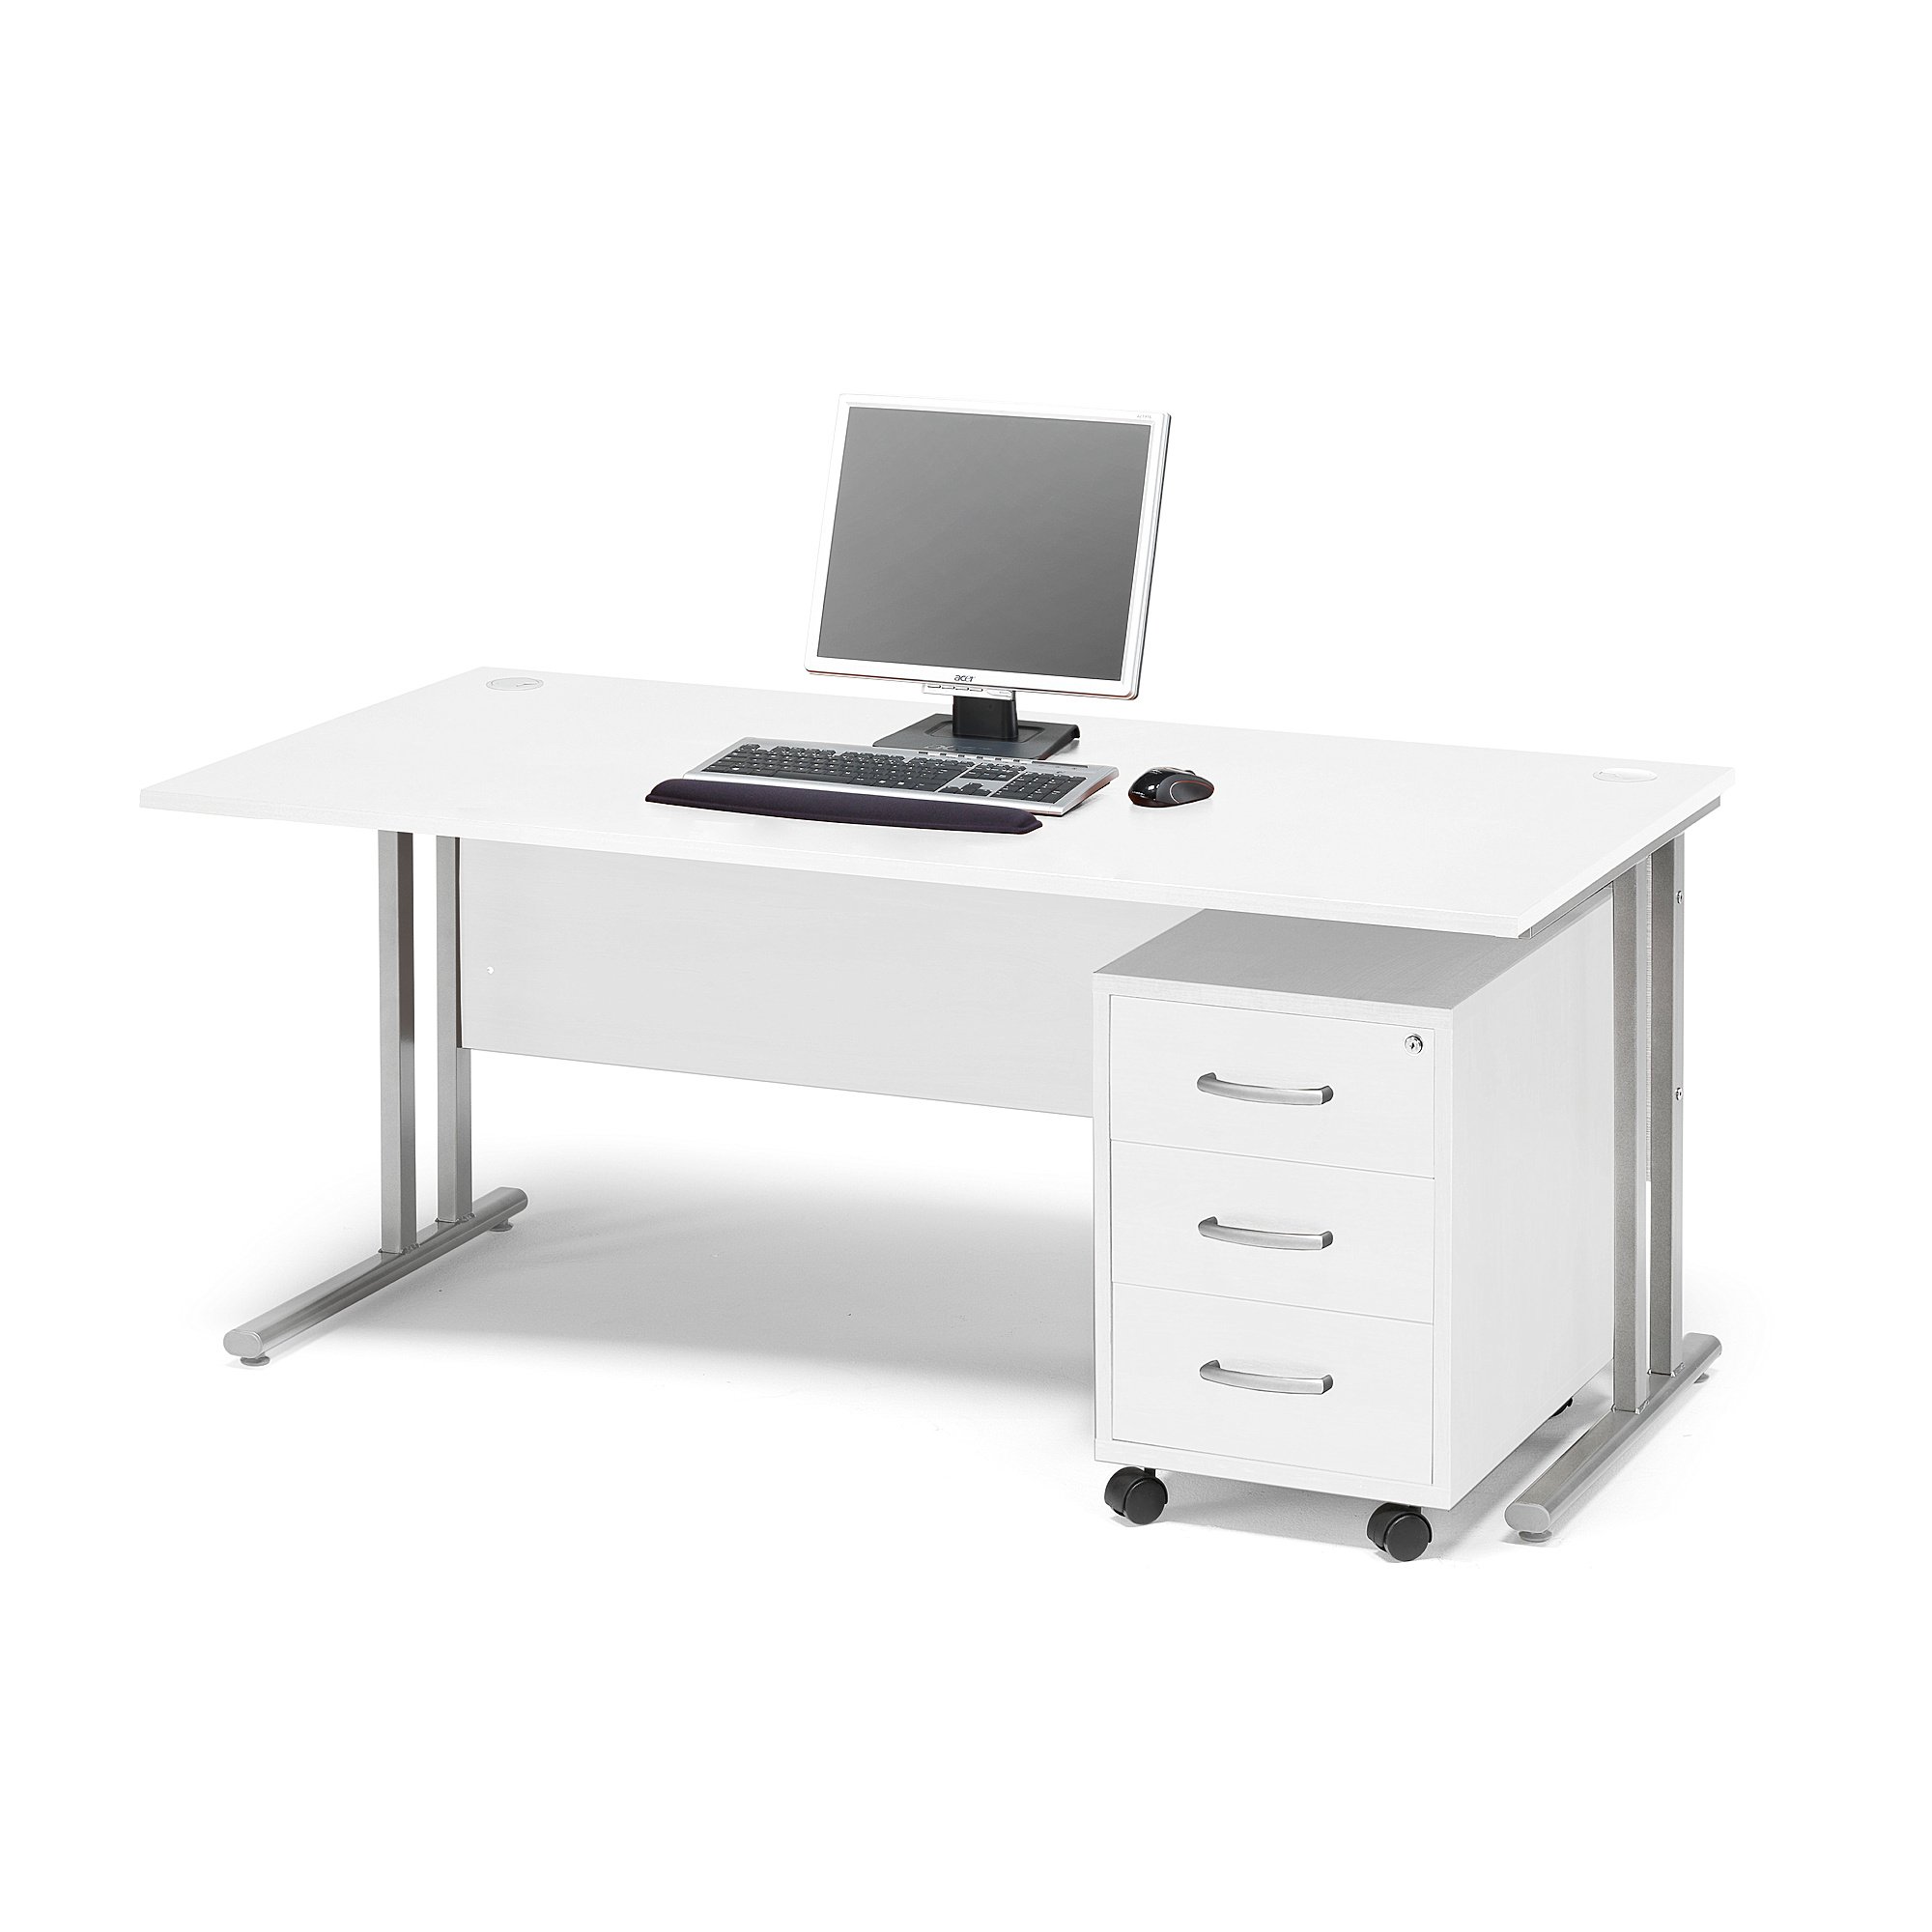 Kancelářská sestava FLEXUS, stůl 1600x800 mm + 3zásuvkový kontejner, bílá